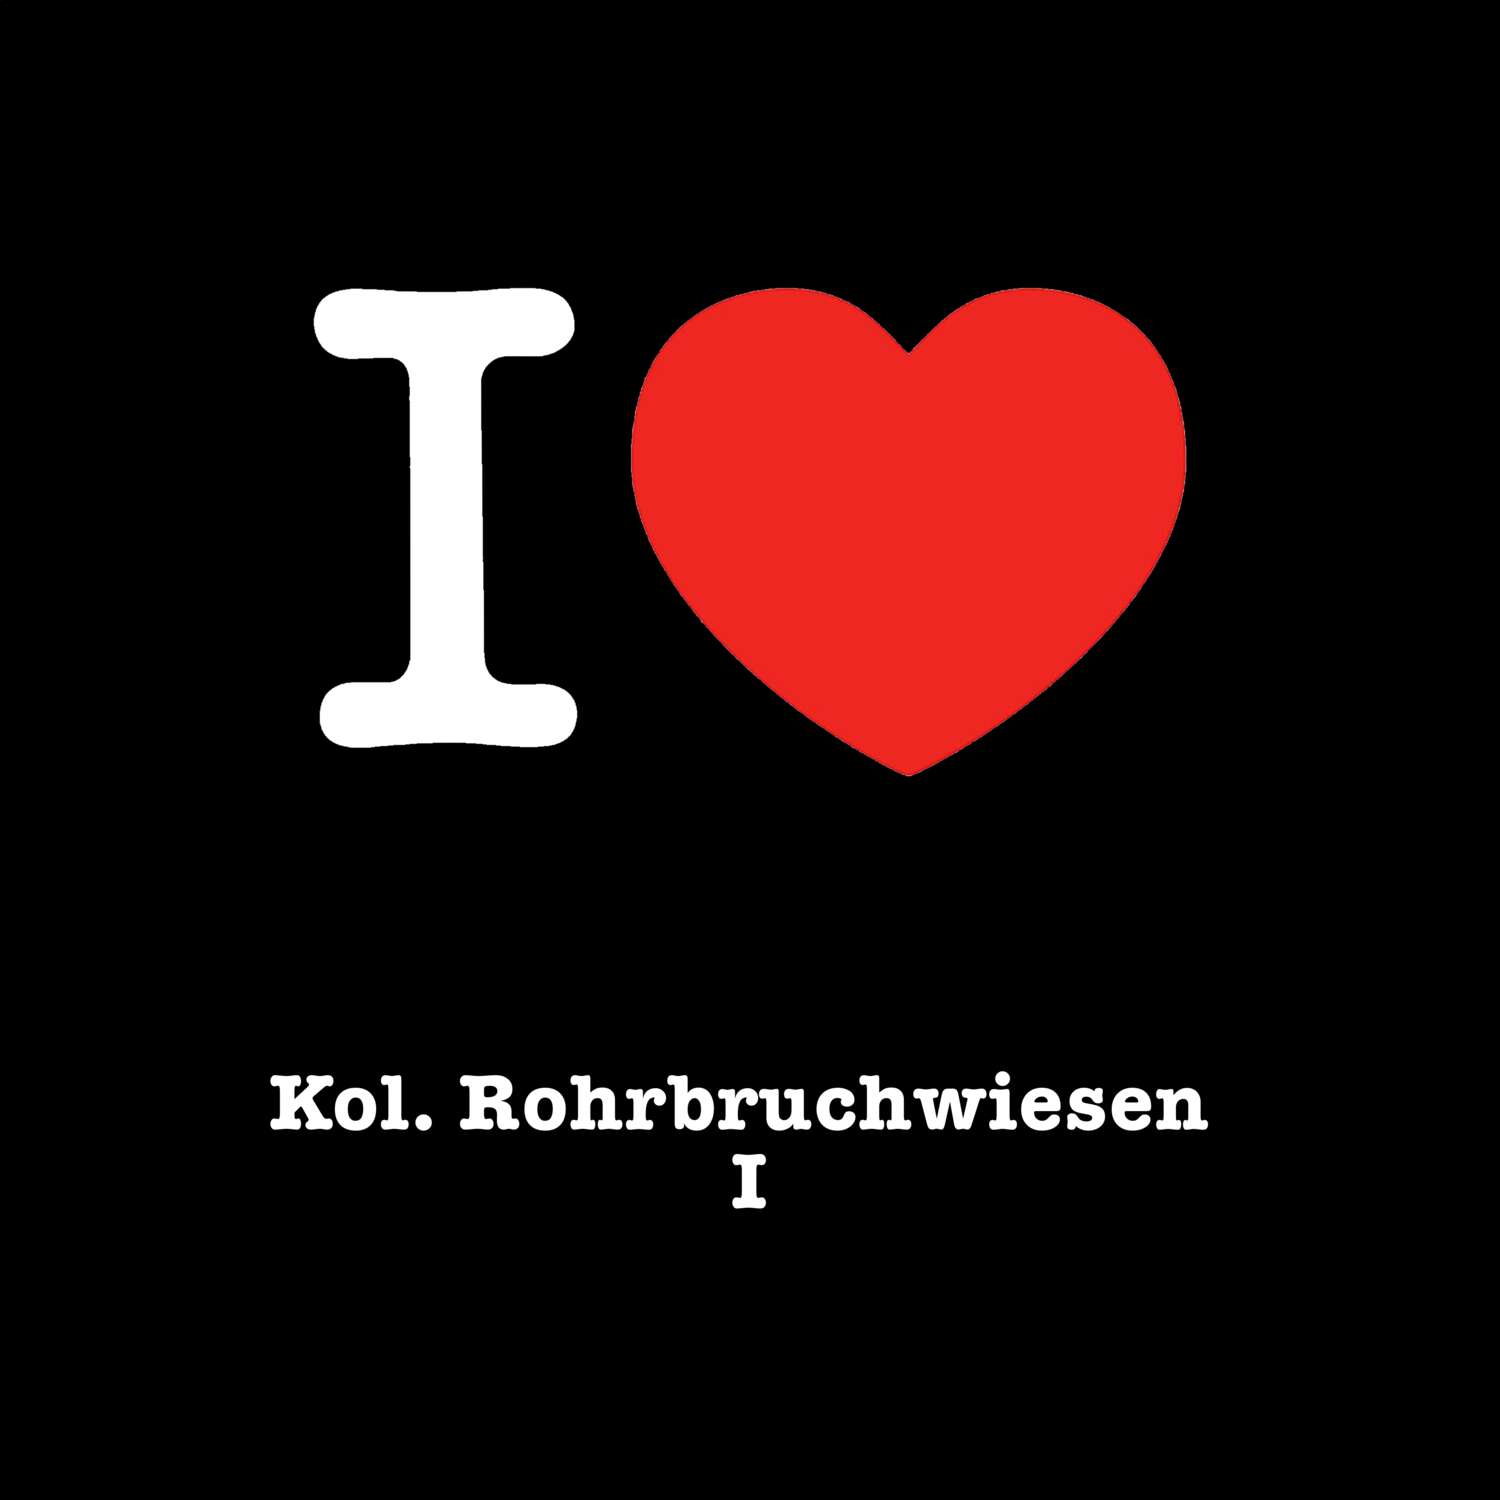 Kol. Rohrbruchwiesen I T-Shirt »I love«